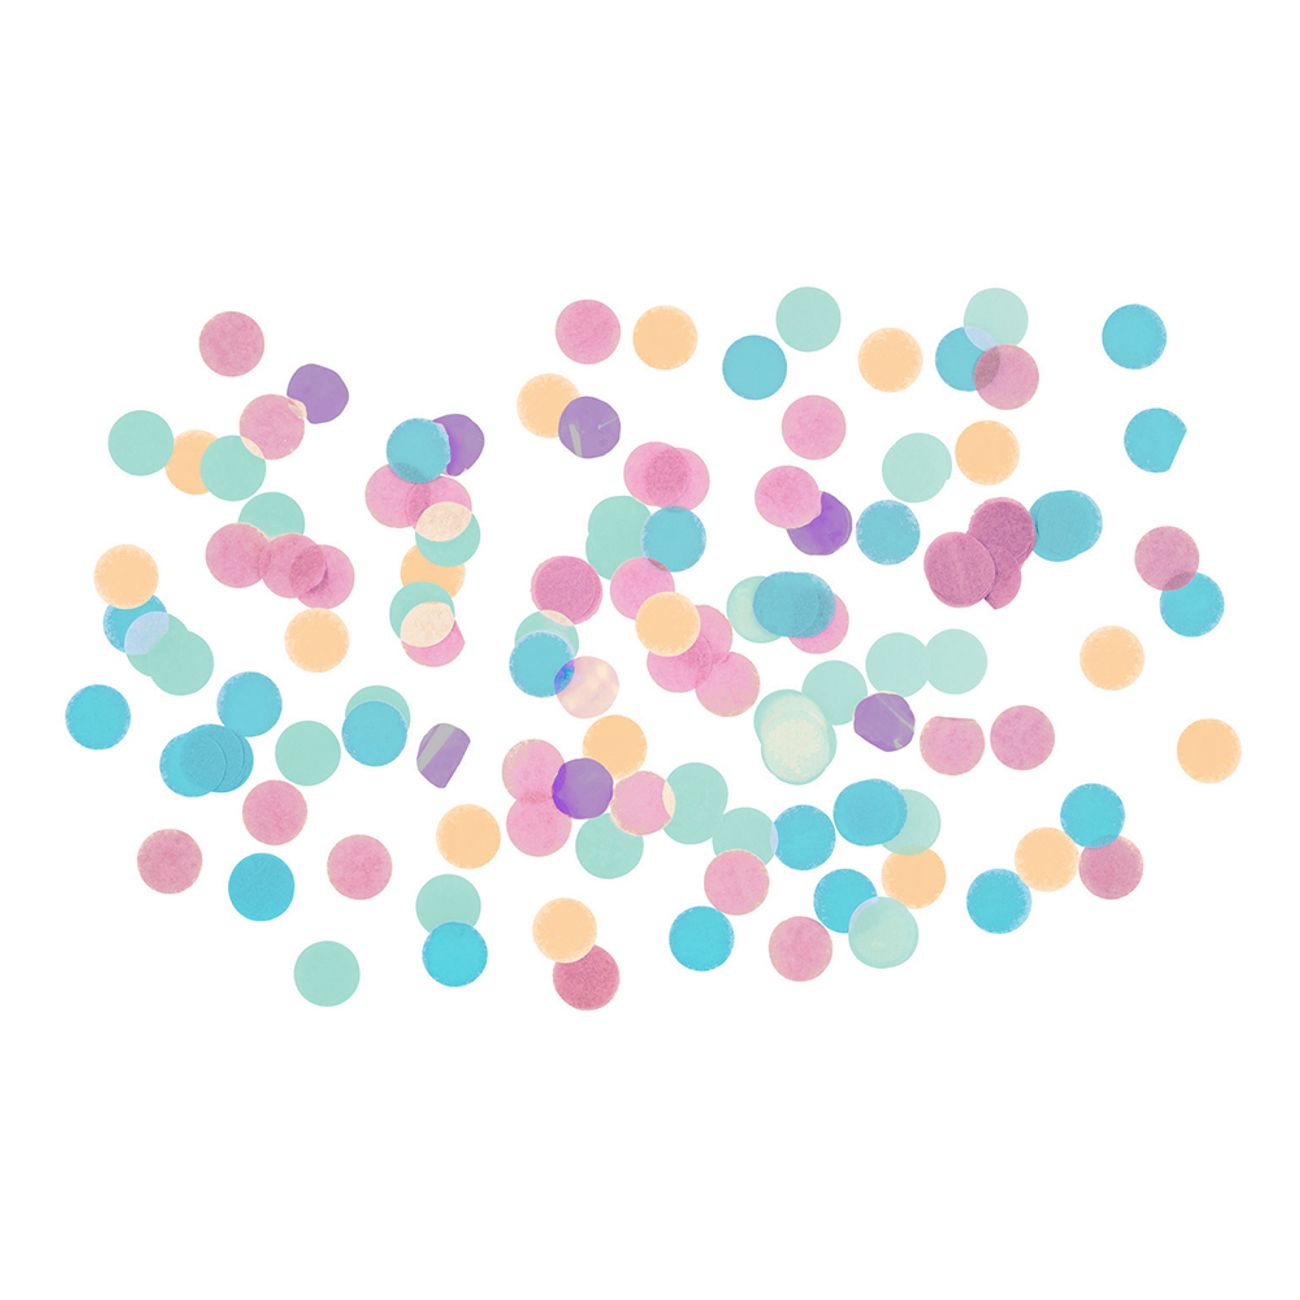 konfetti-rund-pastell-happy-birthday-1